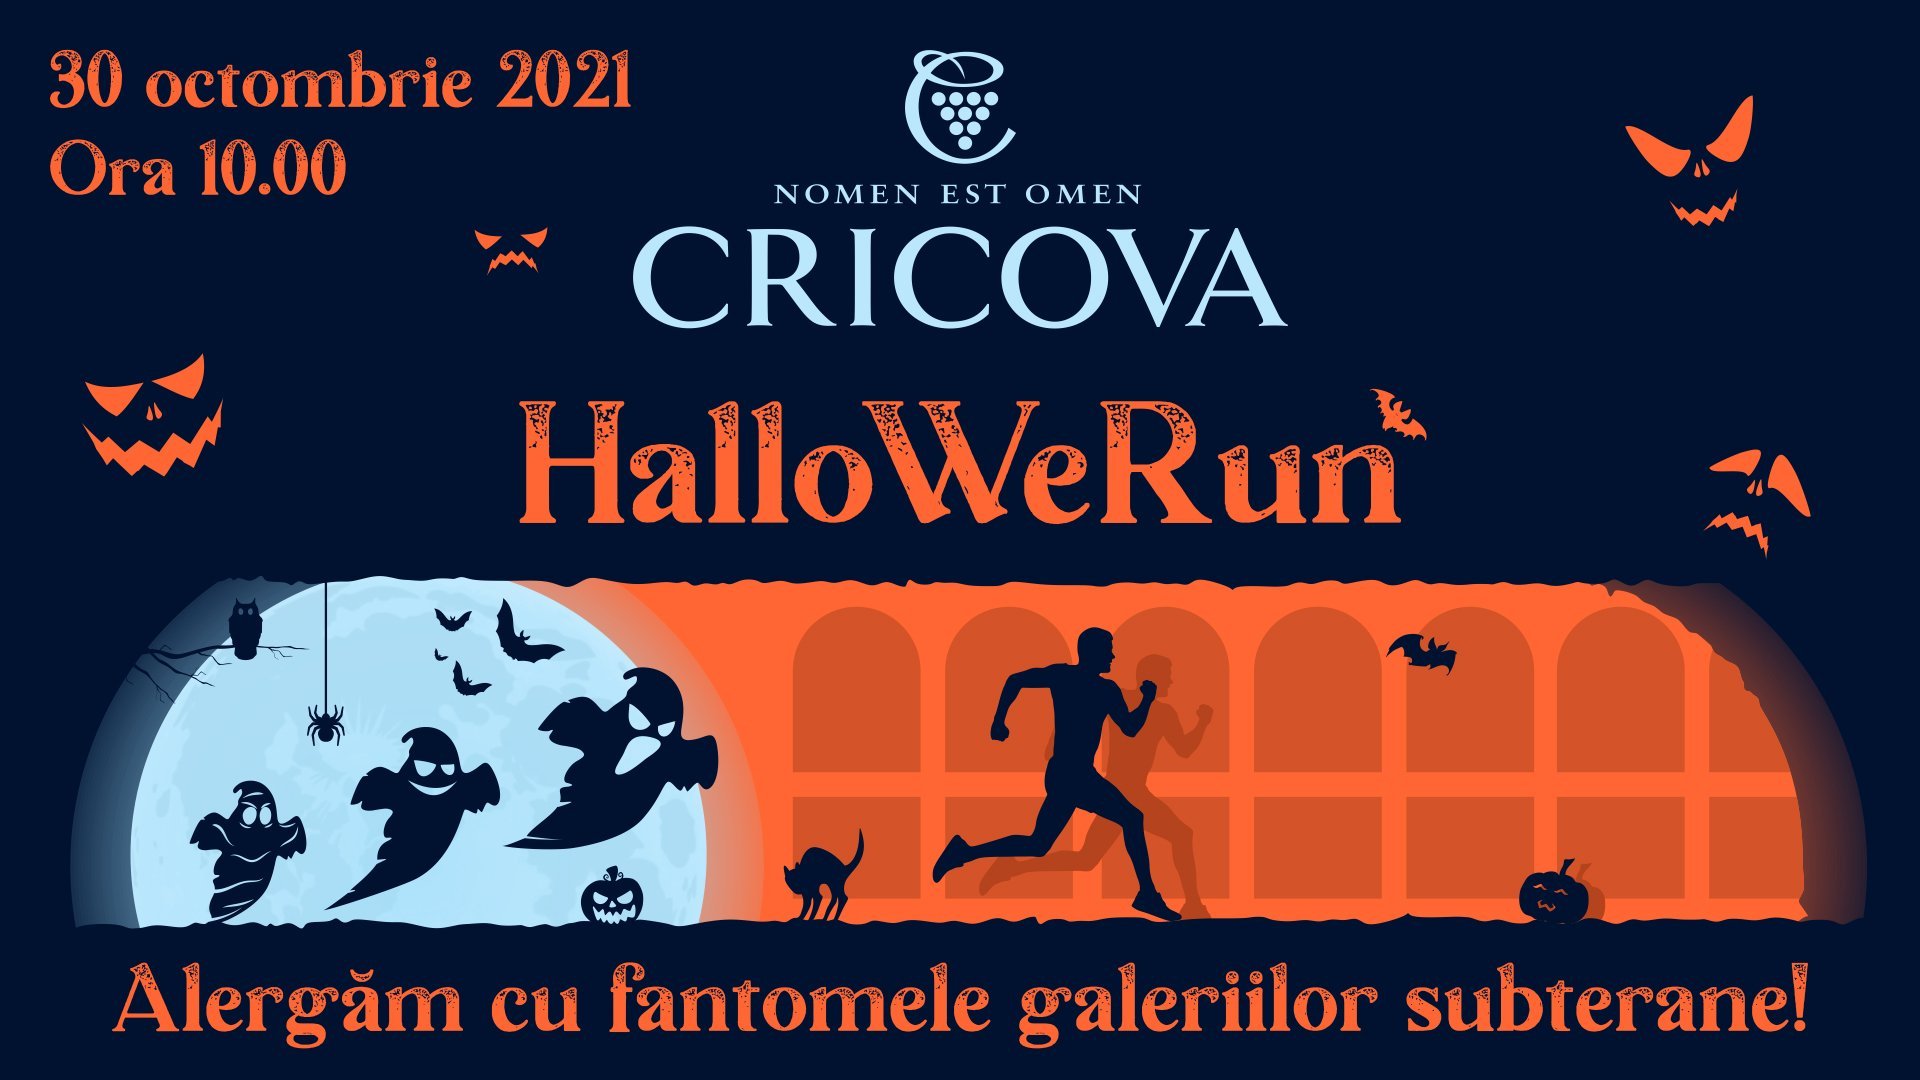 HalloWeRun by Cricova 2021